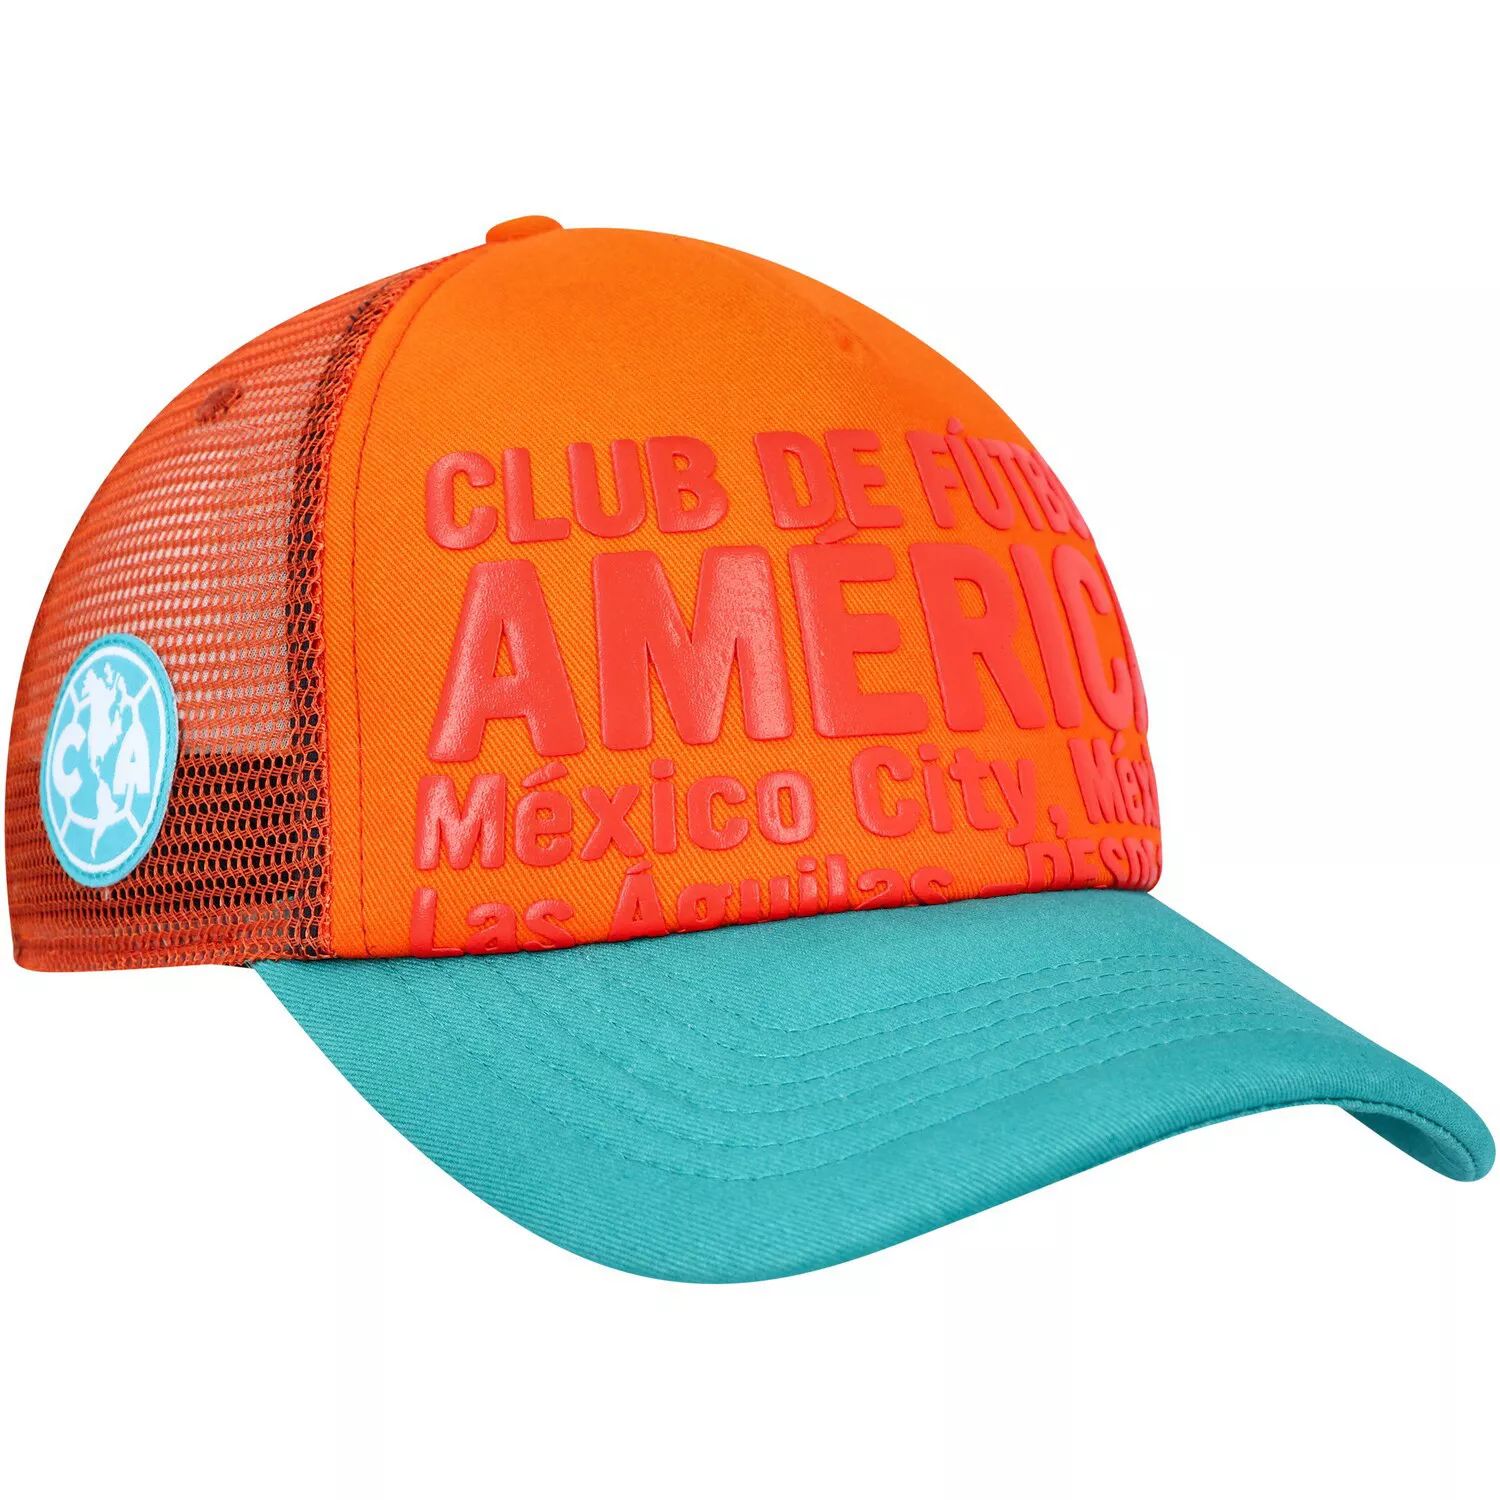 цена Мужская регулируемая шляпа Orange Club America Club Gold